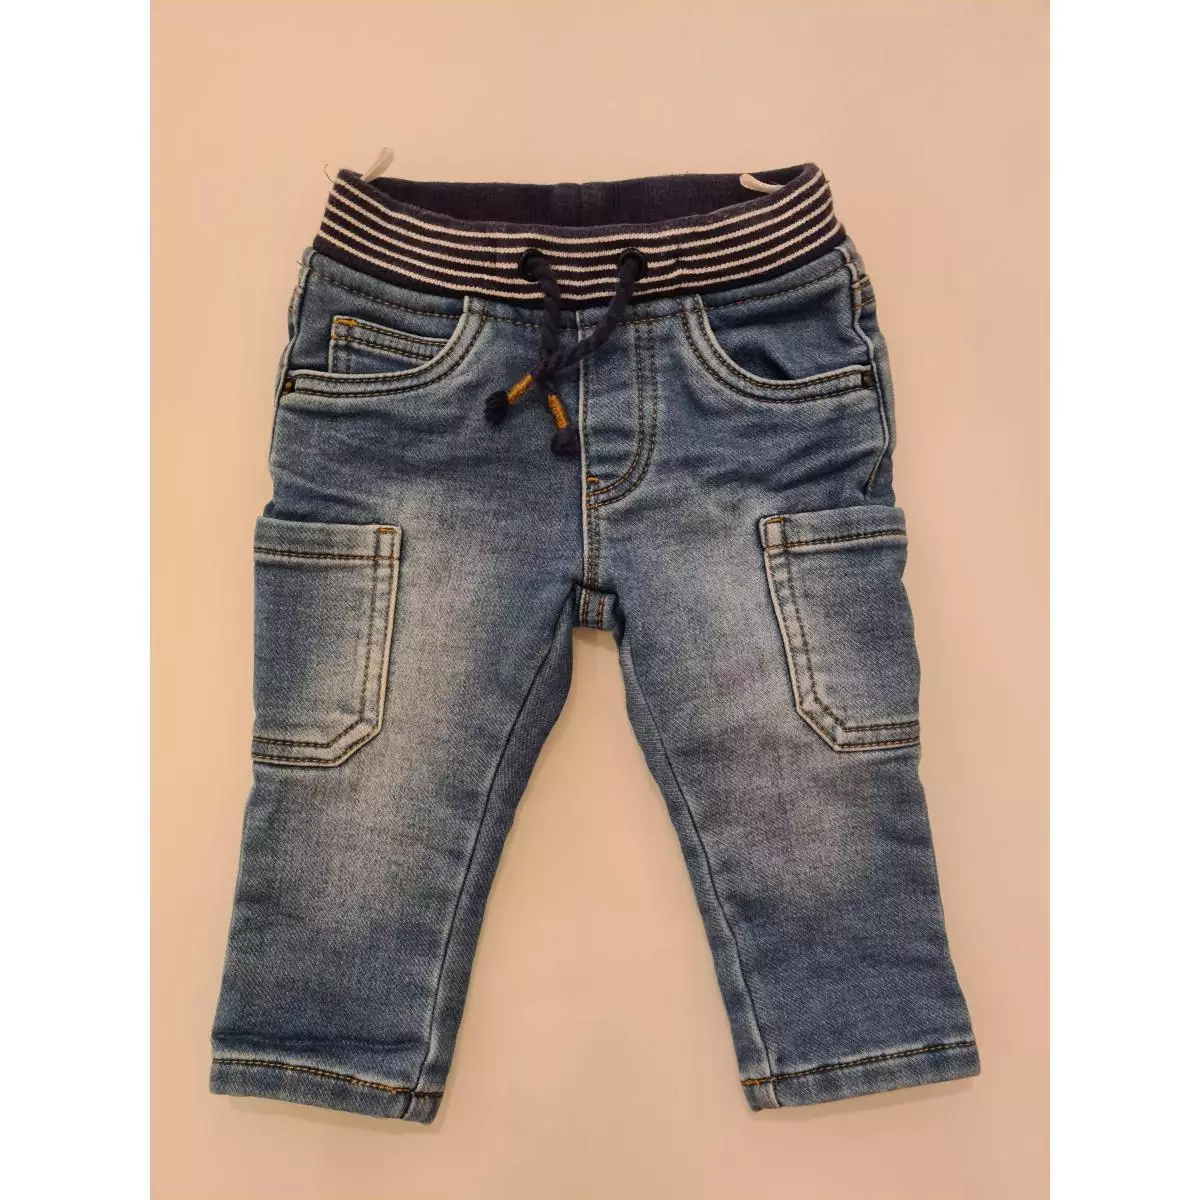 CA jeans hlače za fantka št. 74 - 1